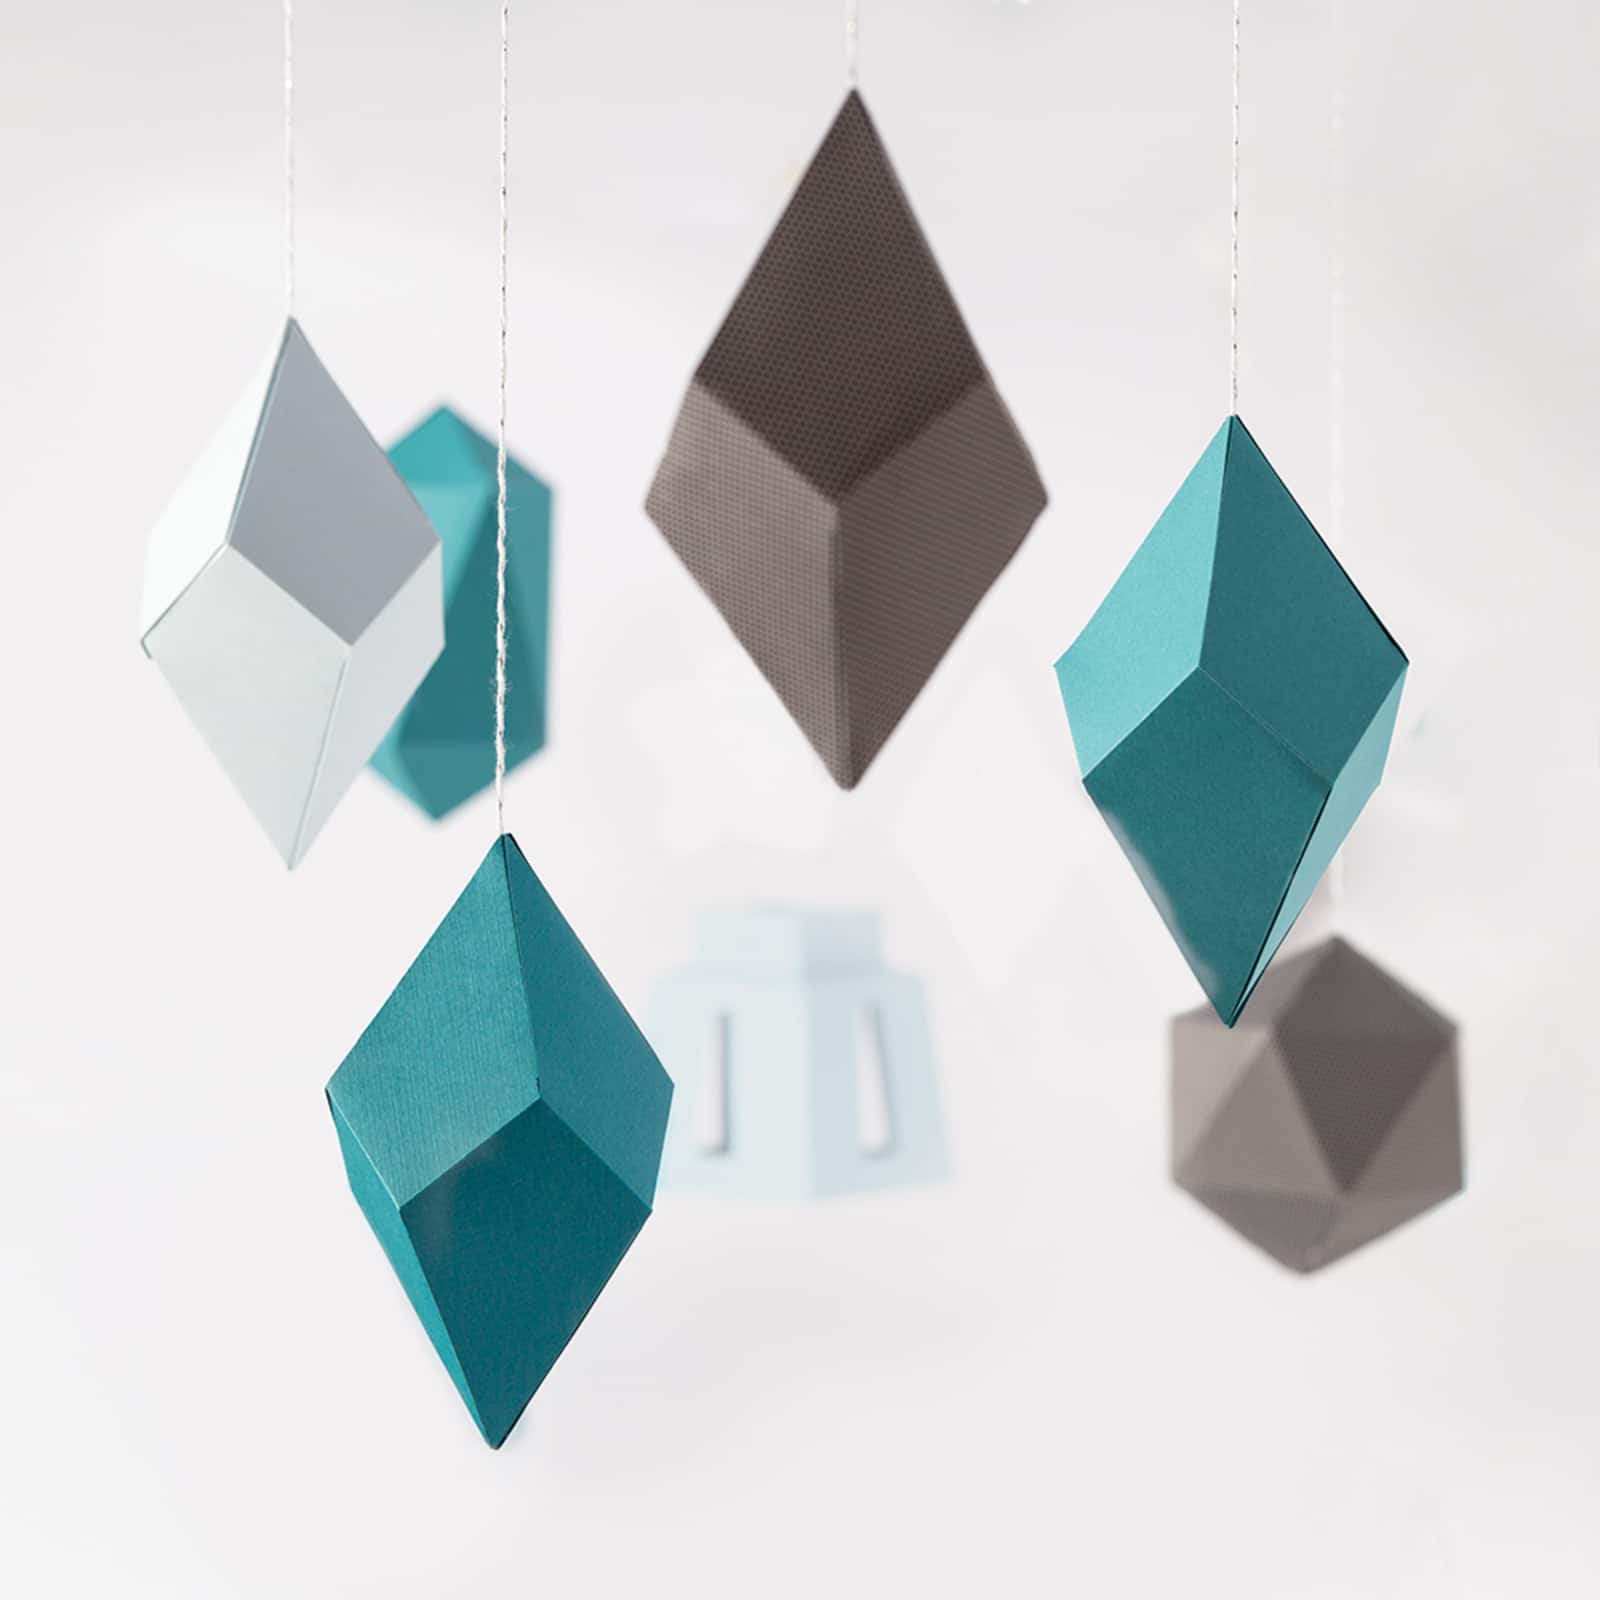 Fiskars&#xAE; Paper Gem Jewel Template